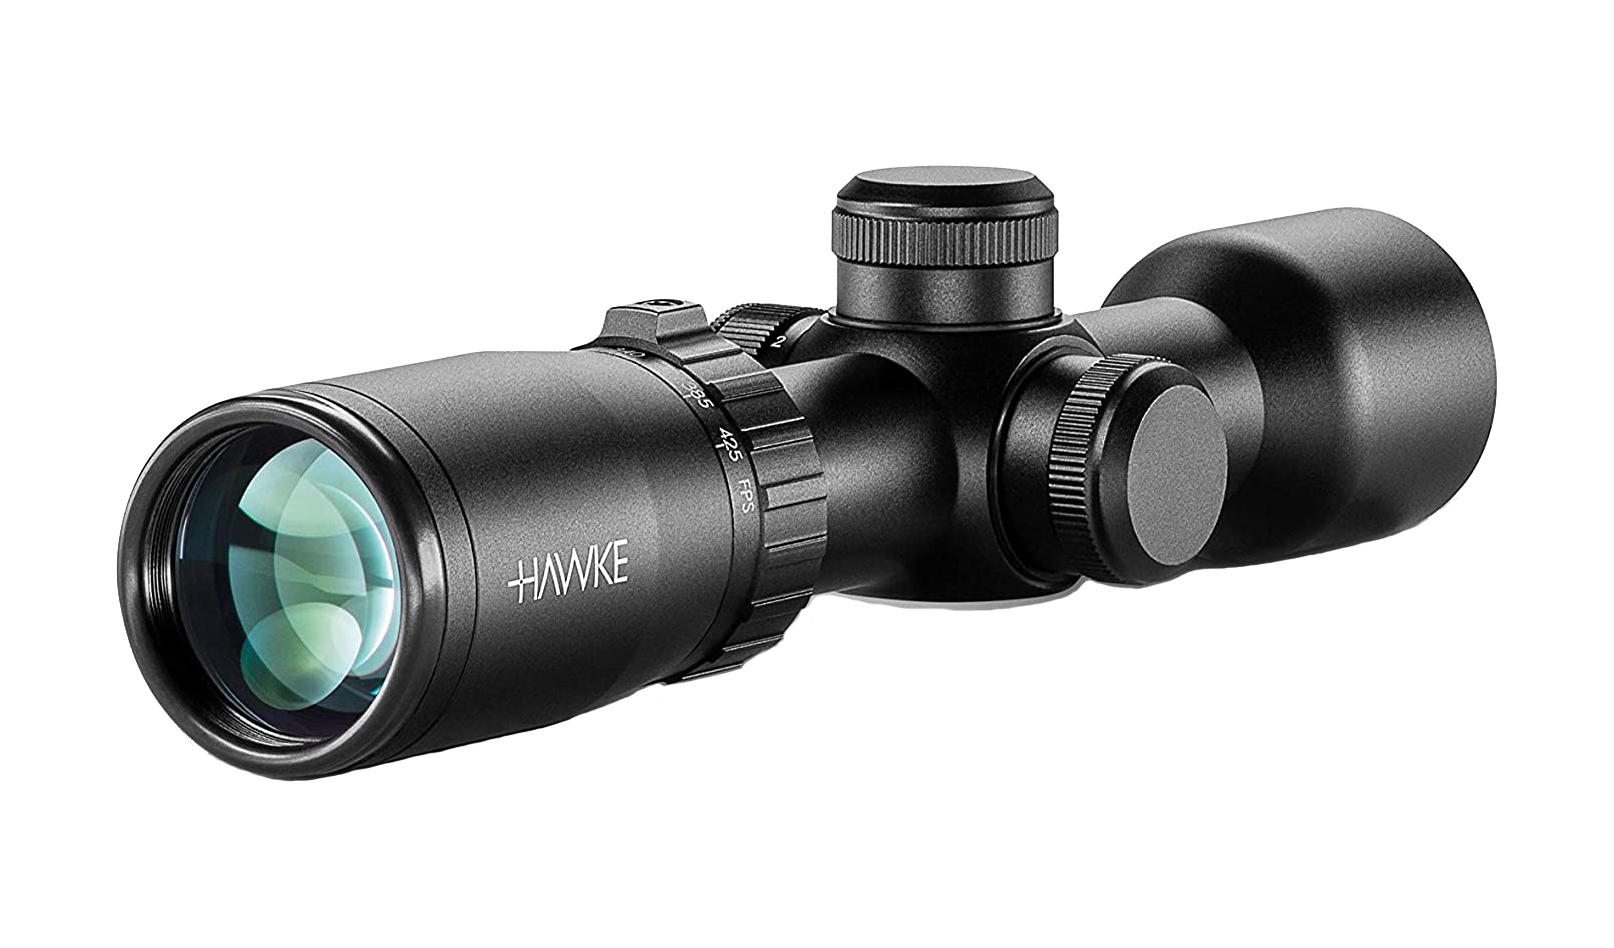 Hawke sport optics #12221 crossbow scope